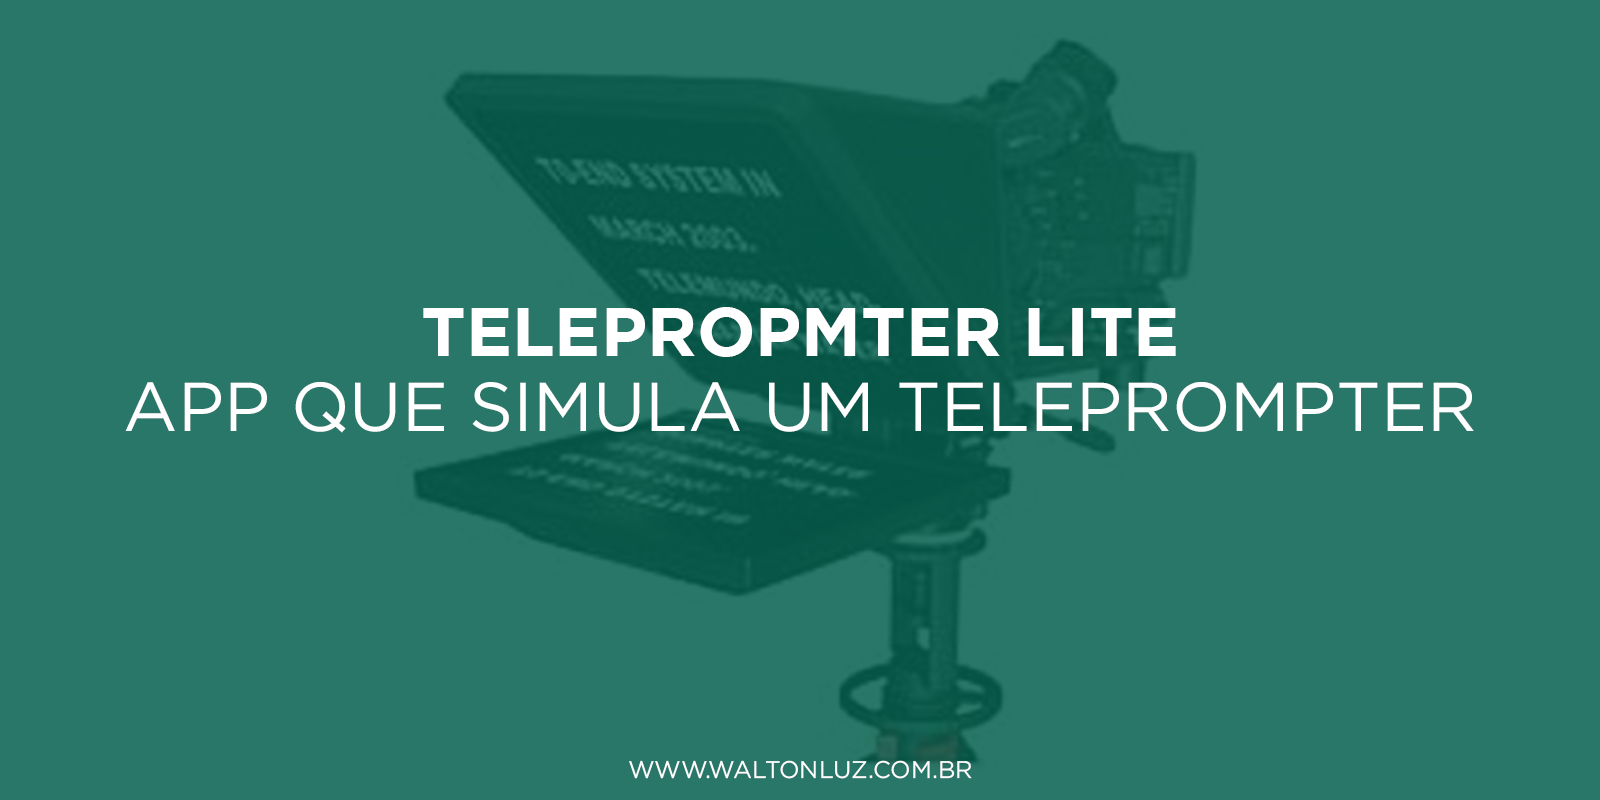 Telepropmter Lite: app que simula um teleprompter